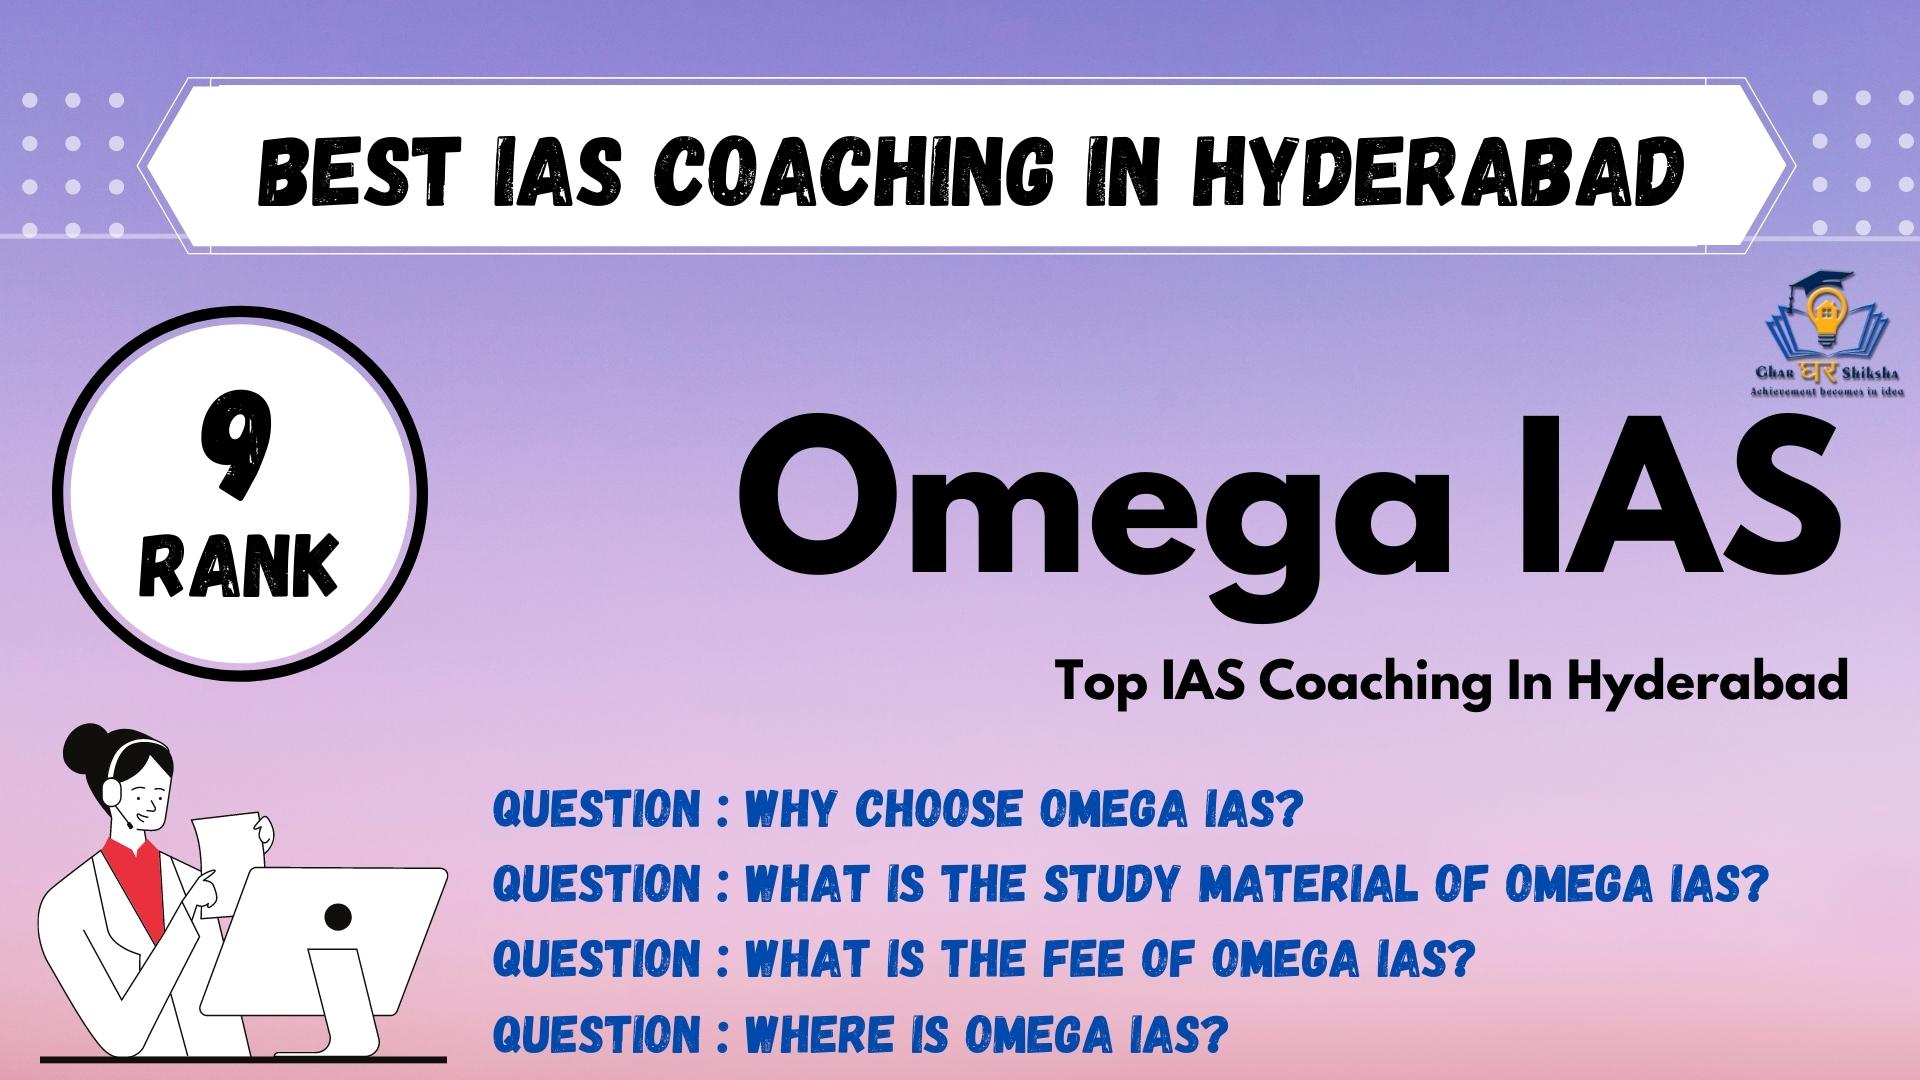 Top IAS Coaching In Hyderabad